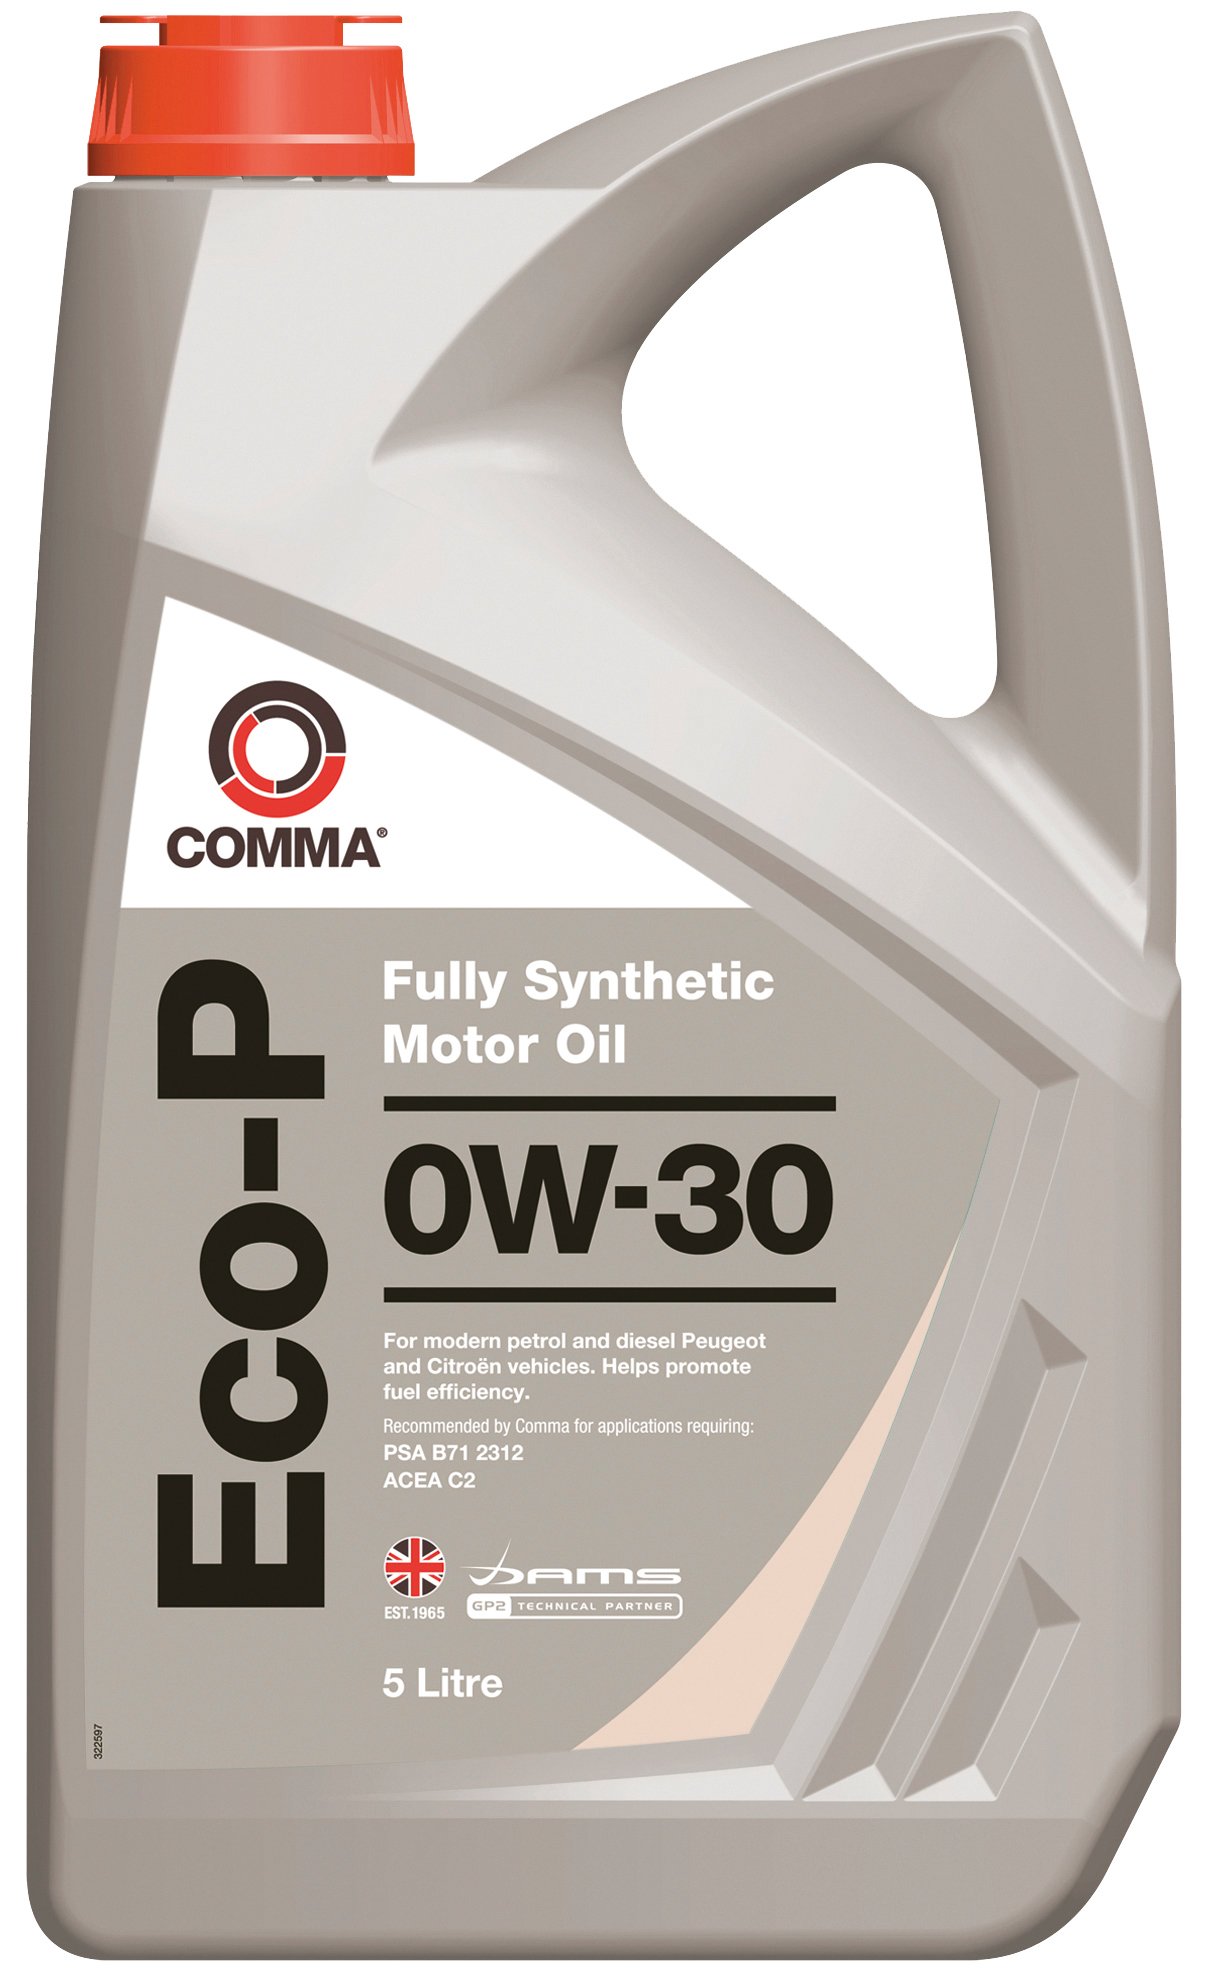 Comma ecop5l C2 Motoröl, 5 Liter